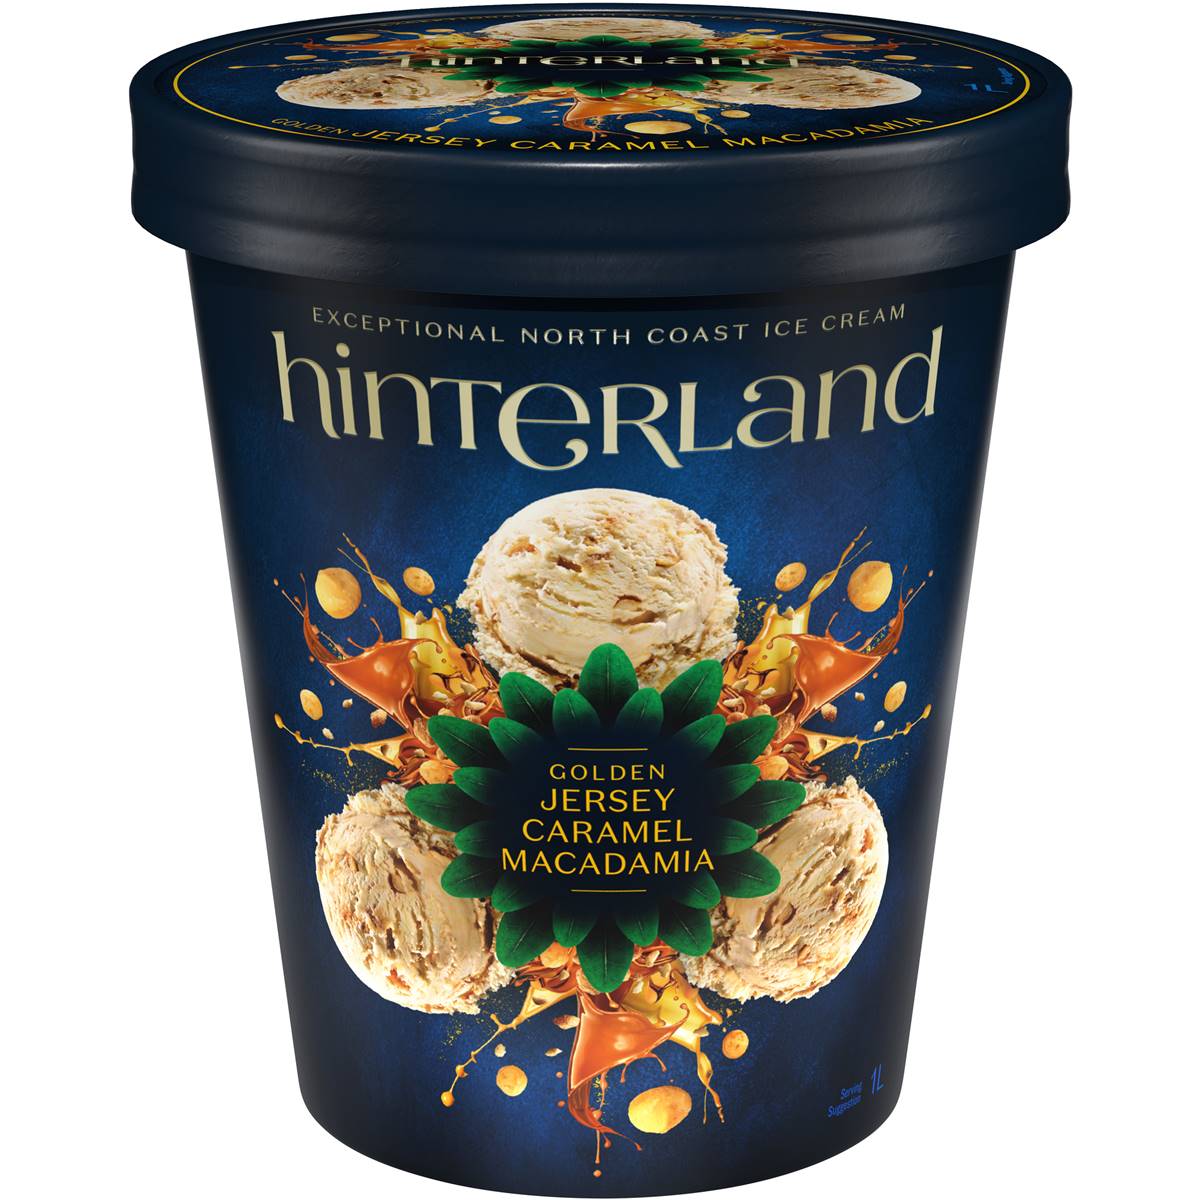 澳洲Hinterland冰淇淋-蜂蜜焦糖堅果, , large